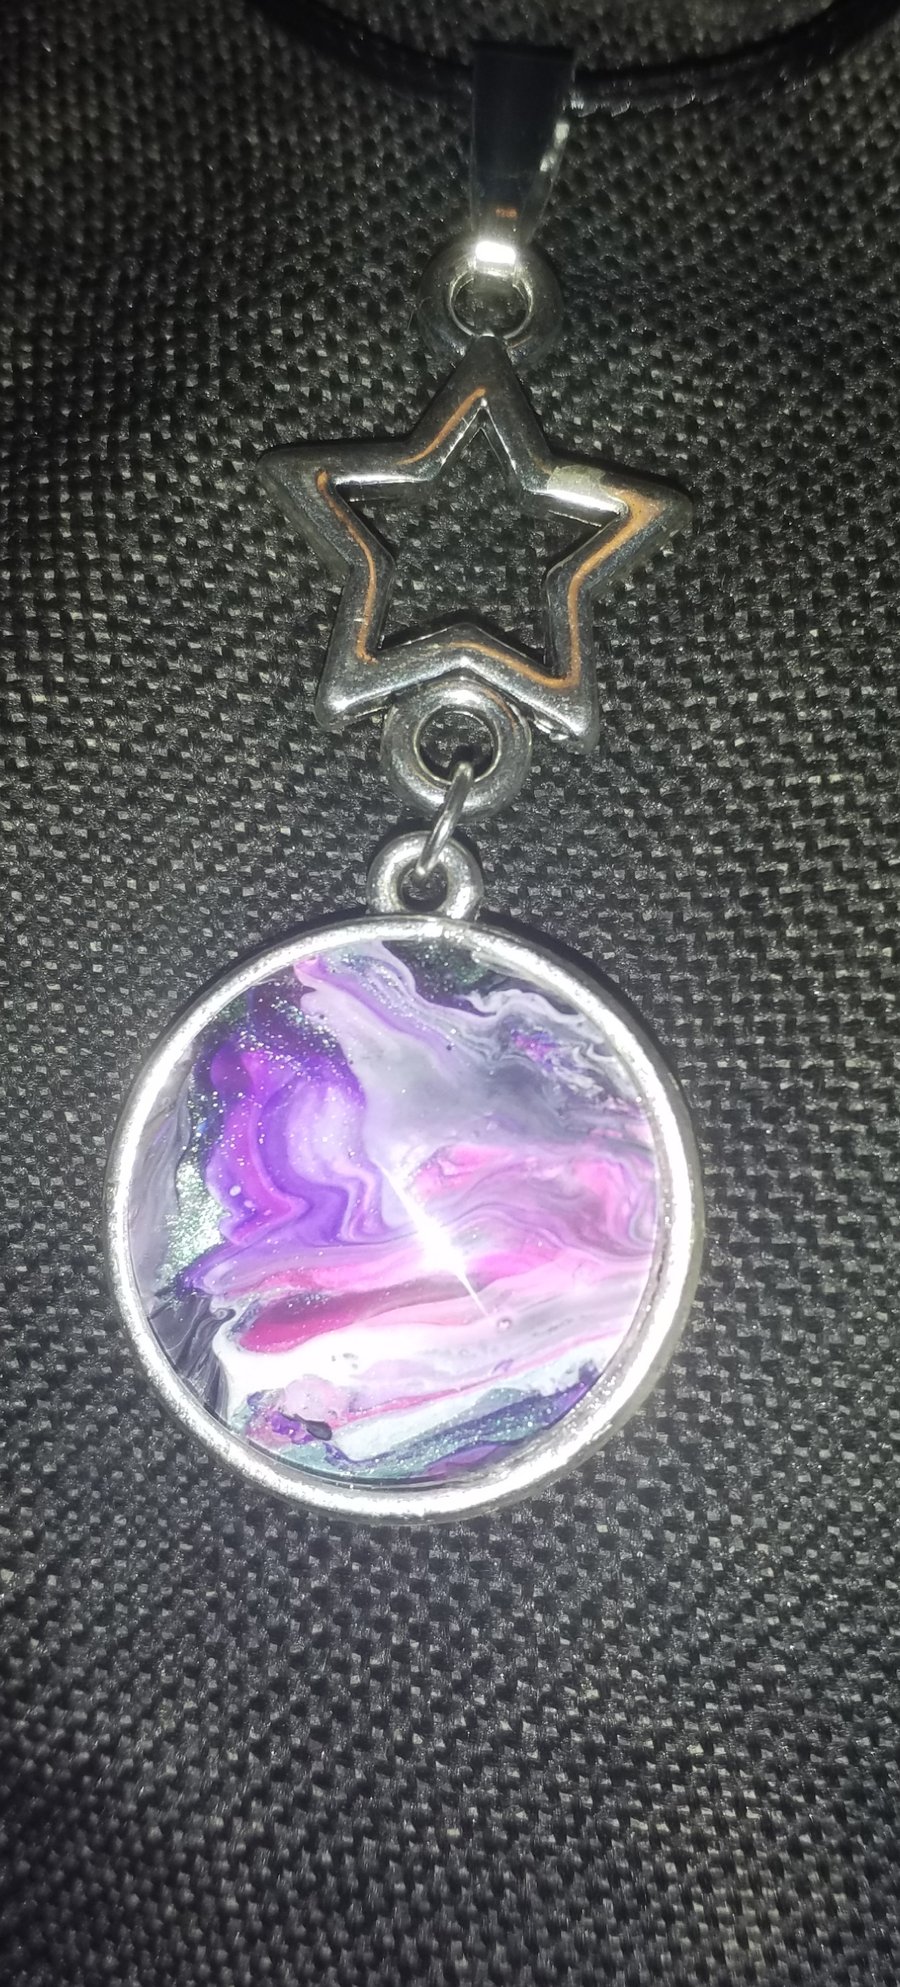 Handmade fluid art double sided pendant with star charm. Purple